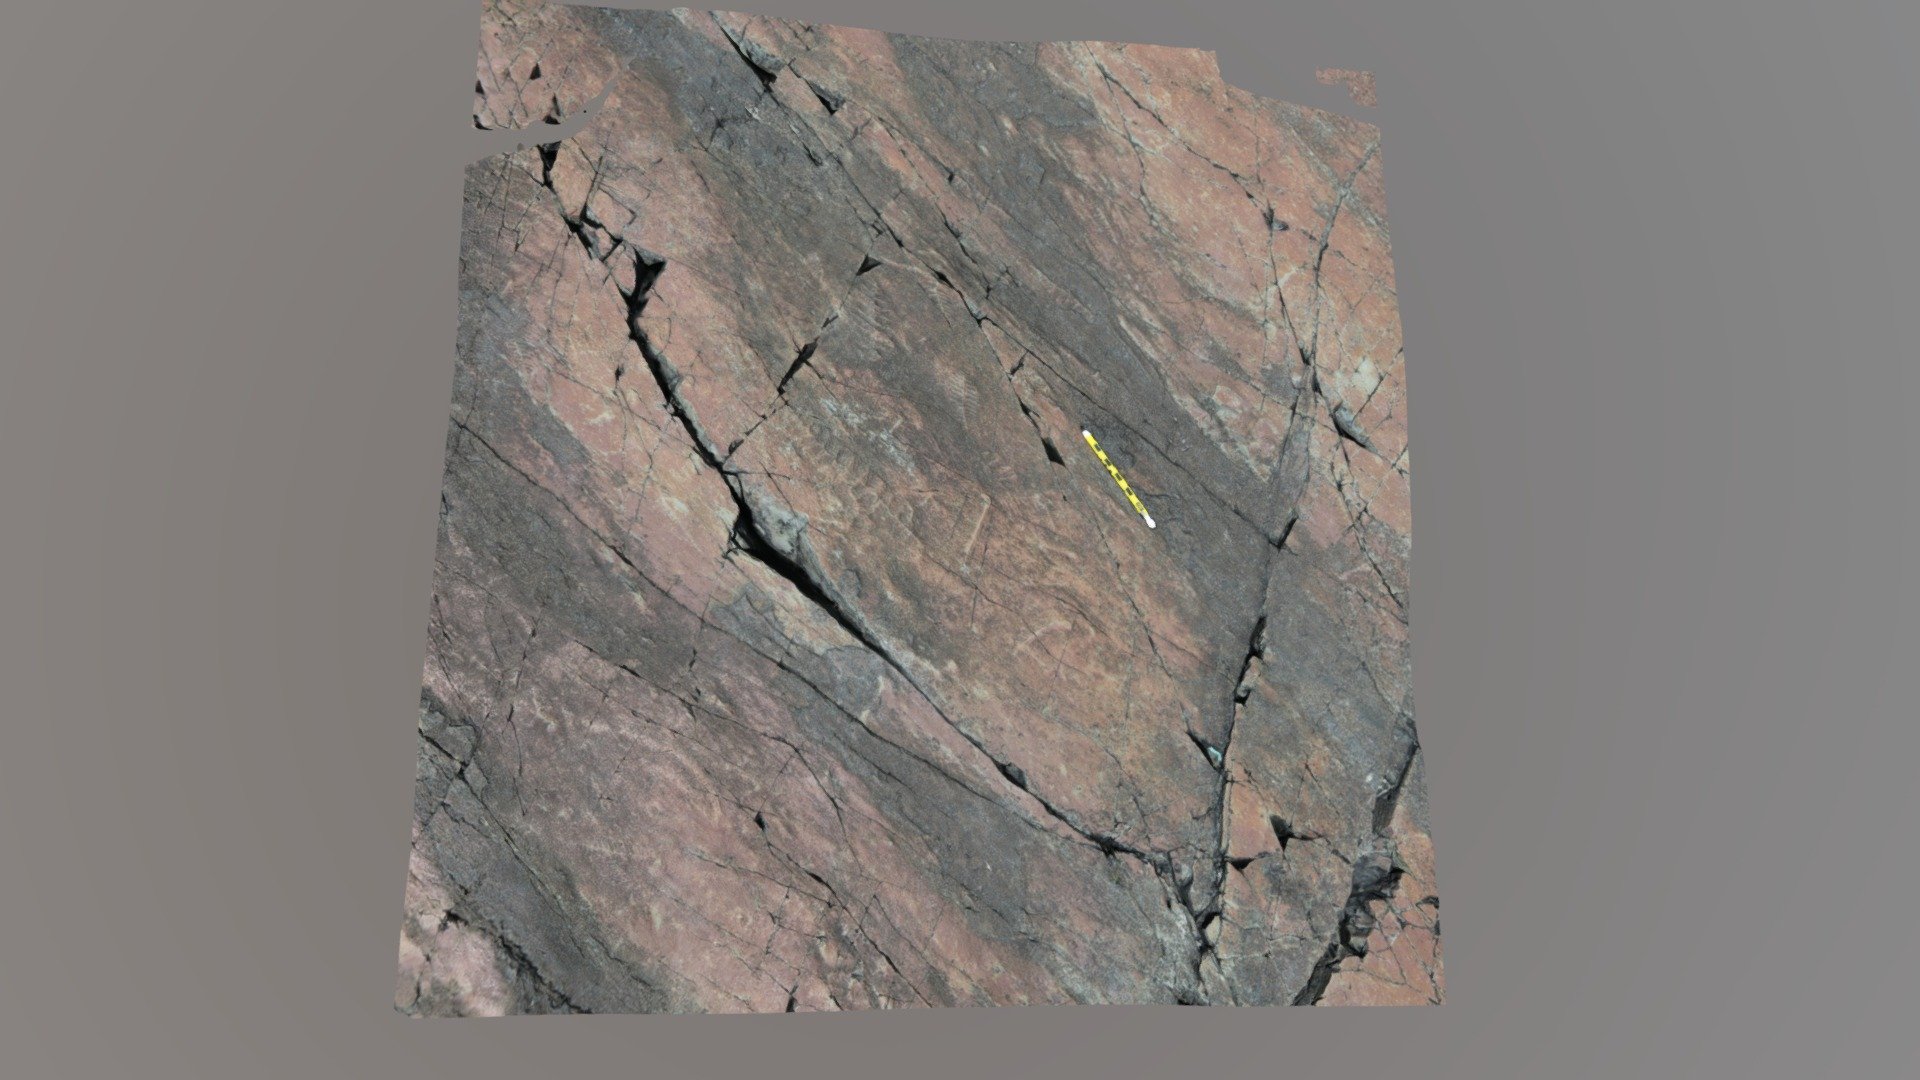 Ediacara fossils at Mistaken Point